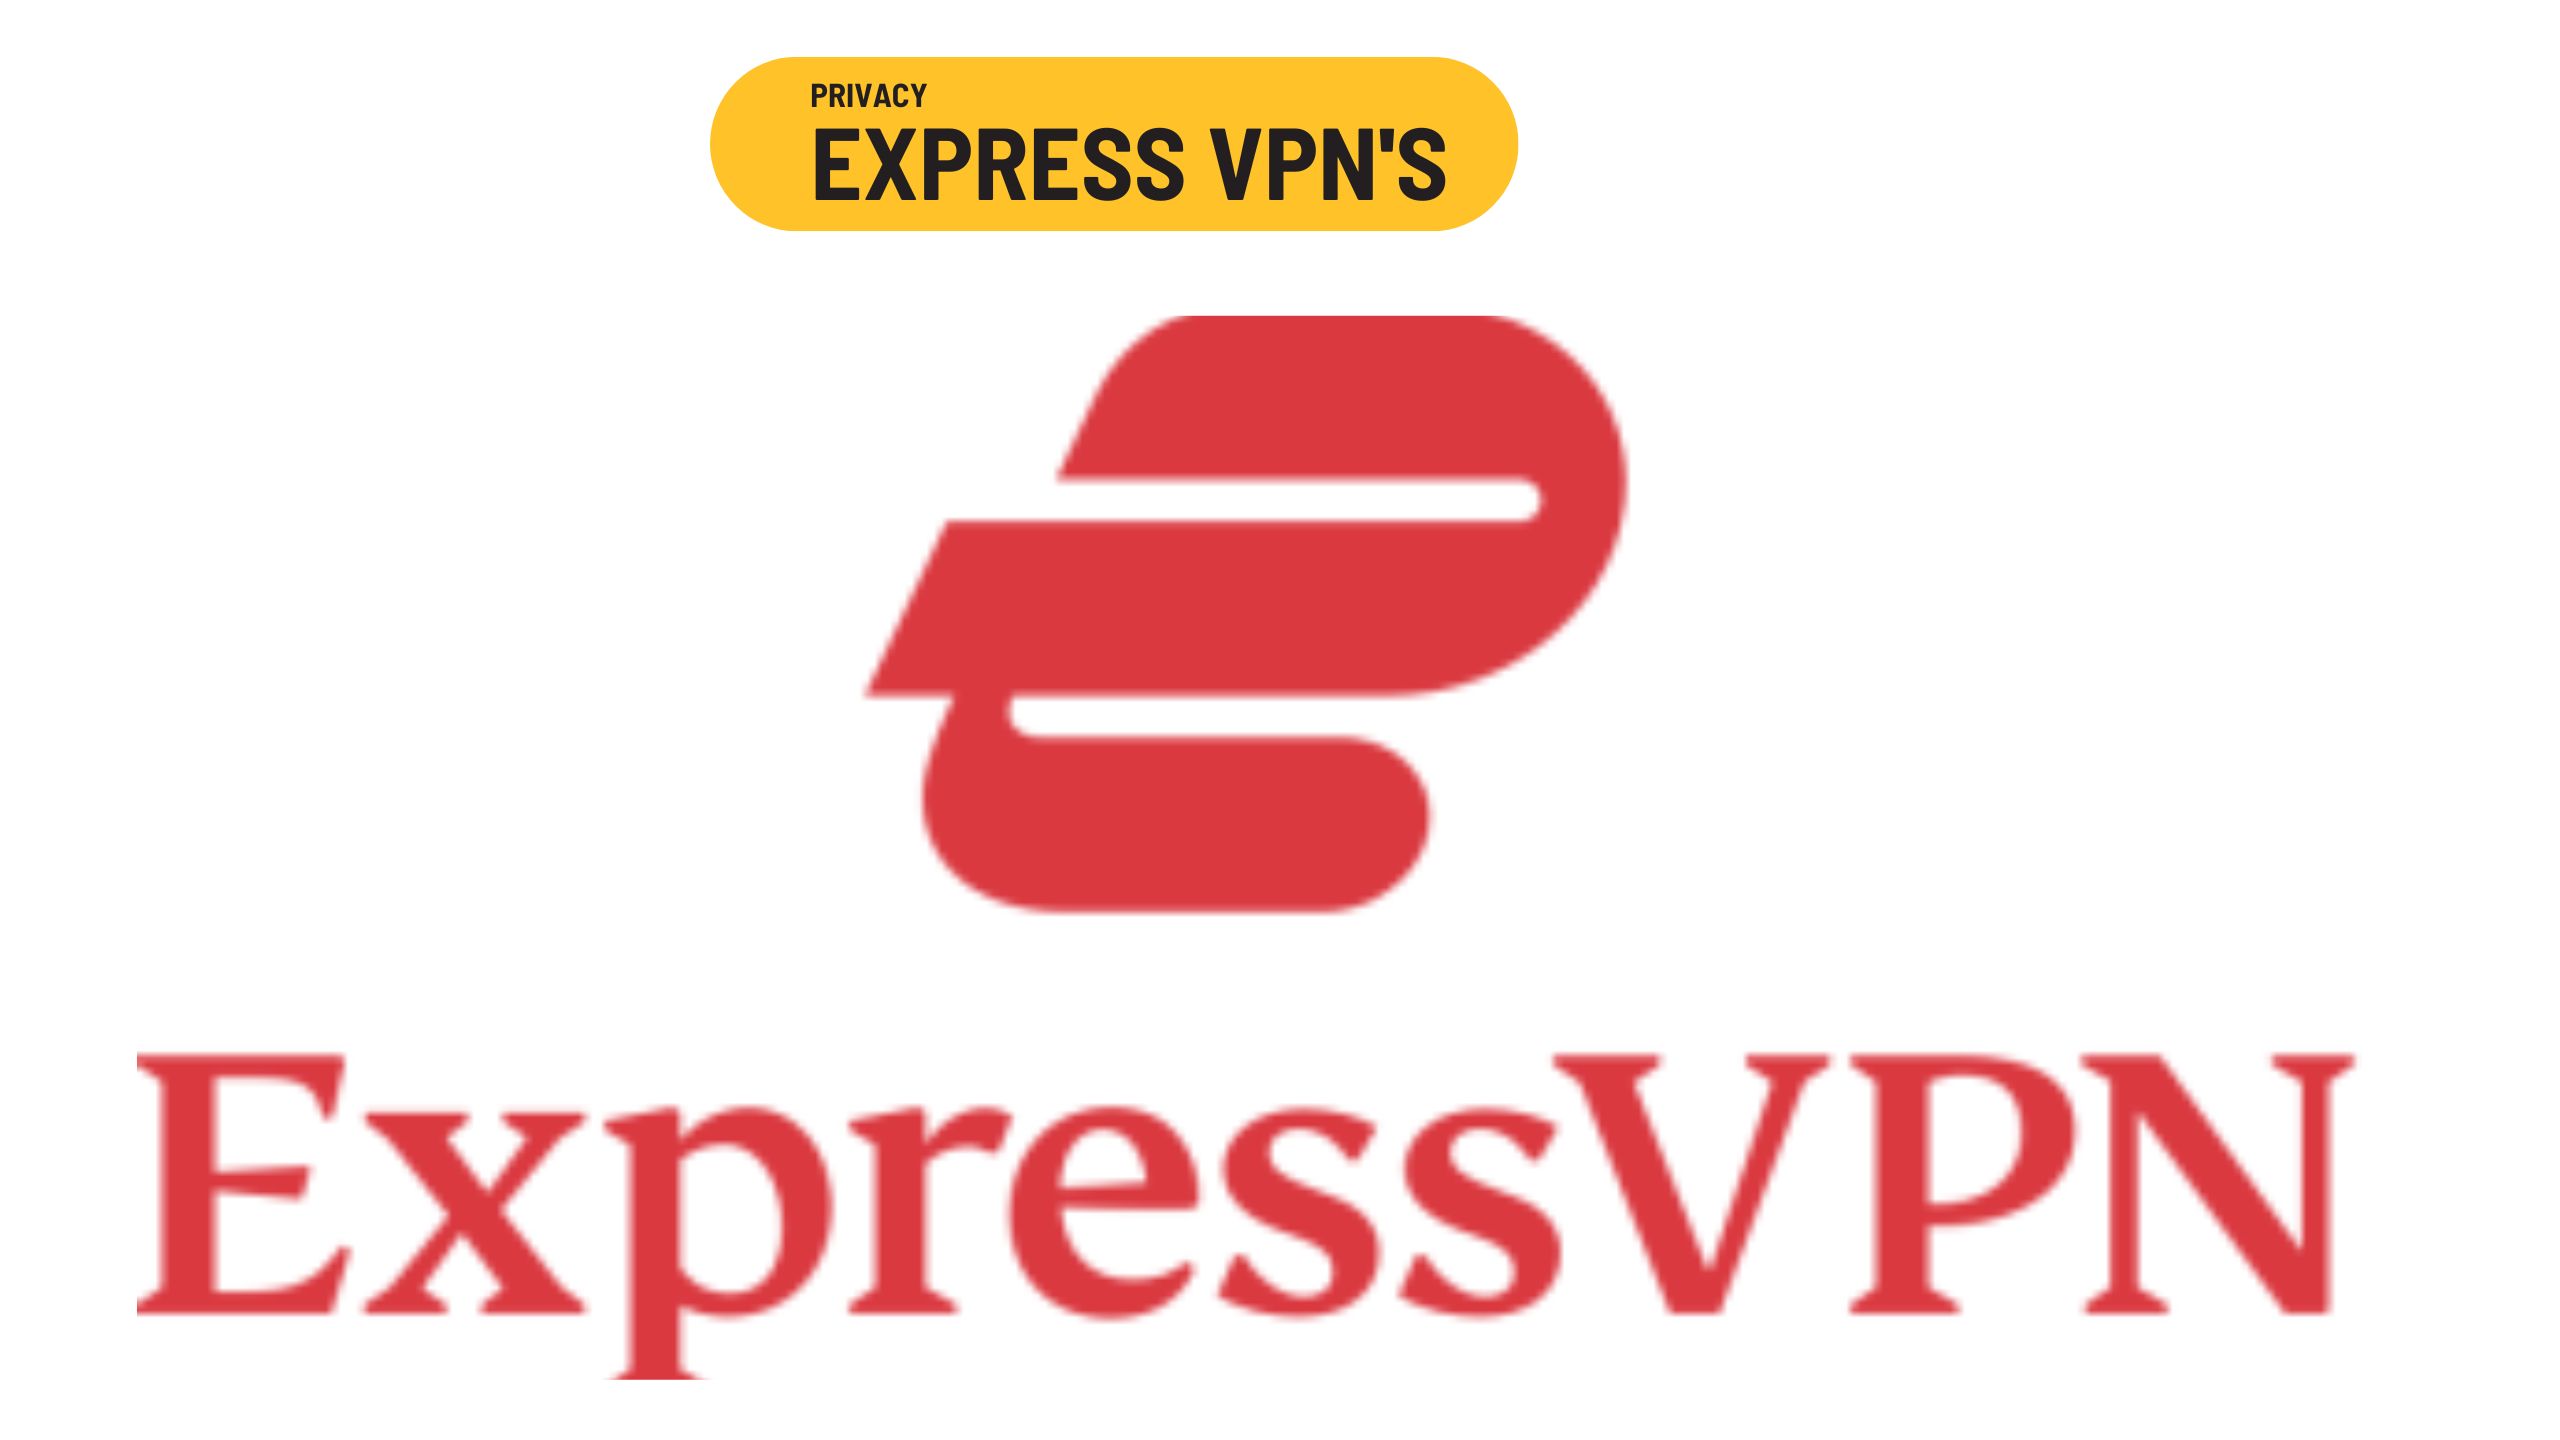 Express-VPN's